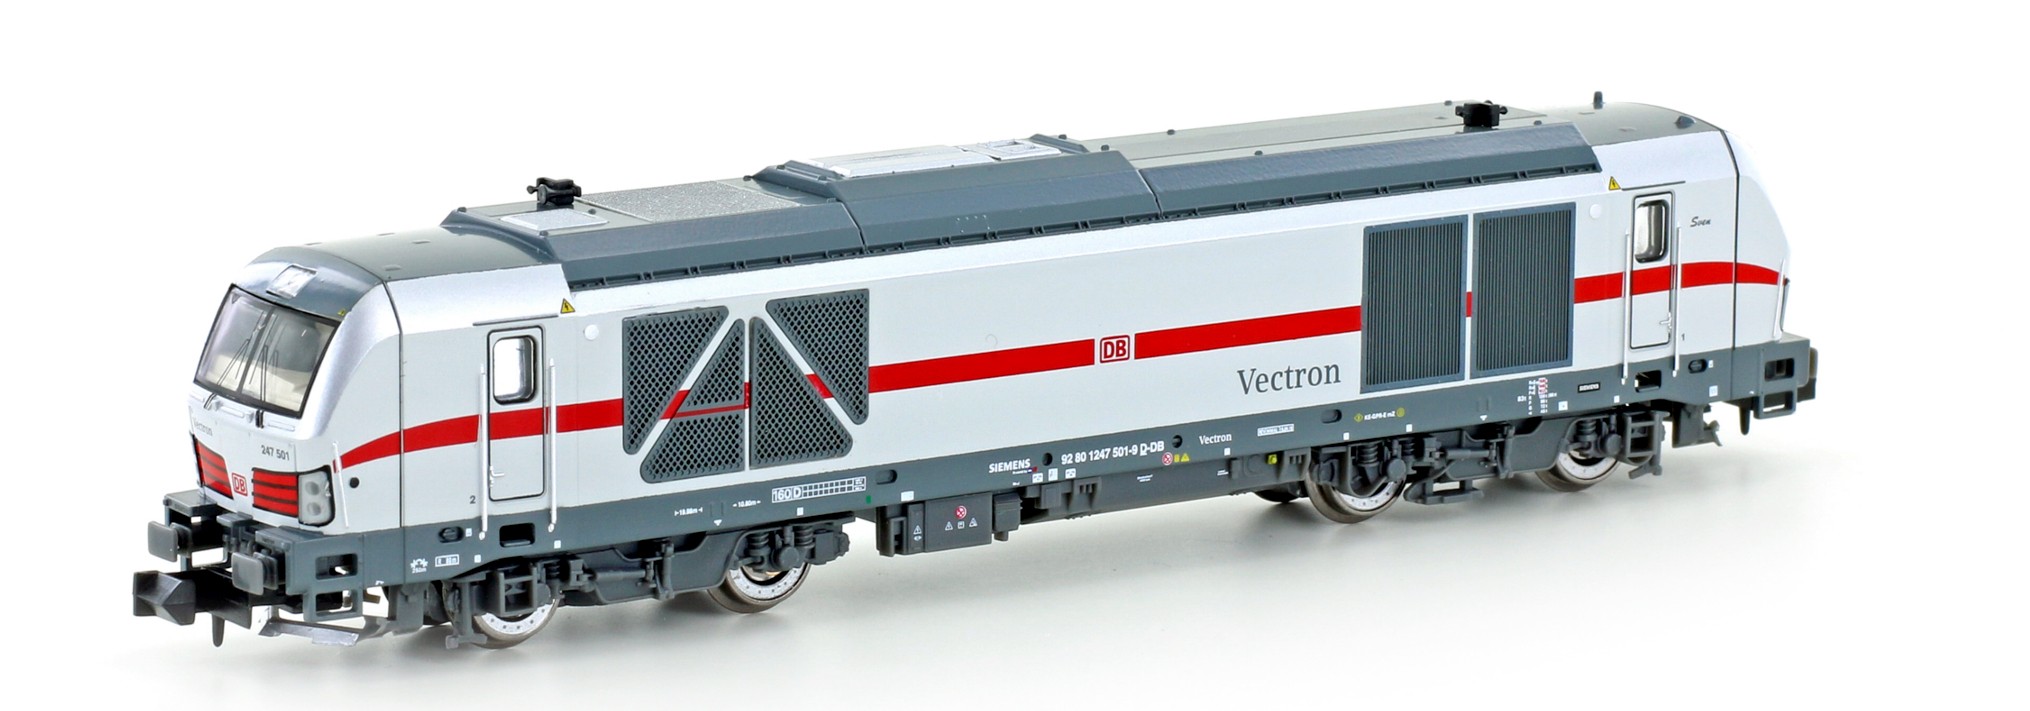 Hobbytrain / Lemke - Locomotiva BR 247 502 Vectron (N): H3108